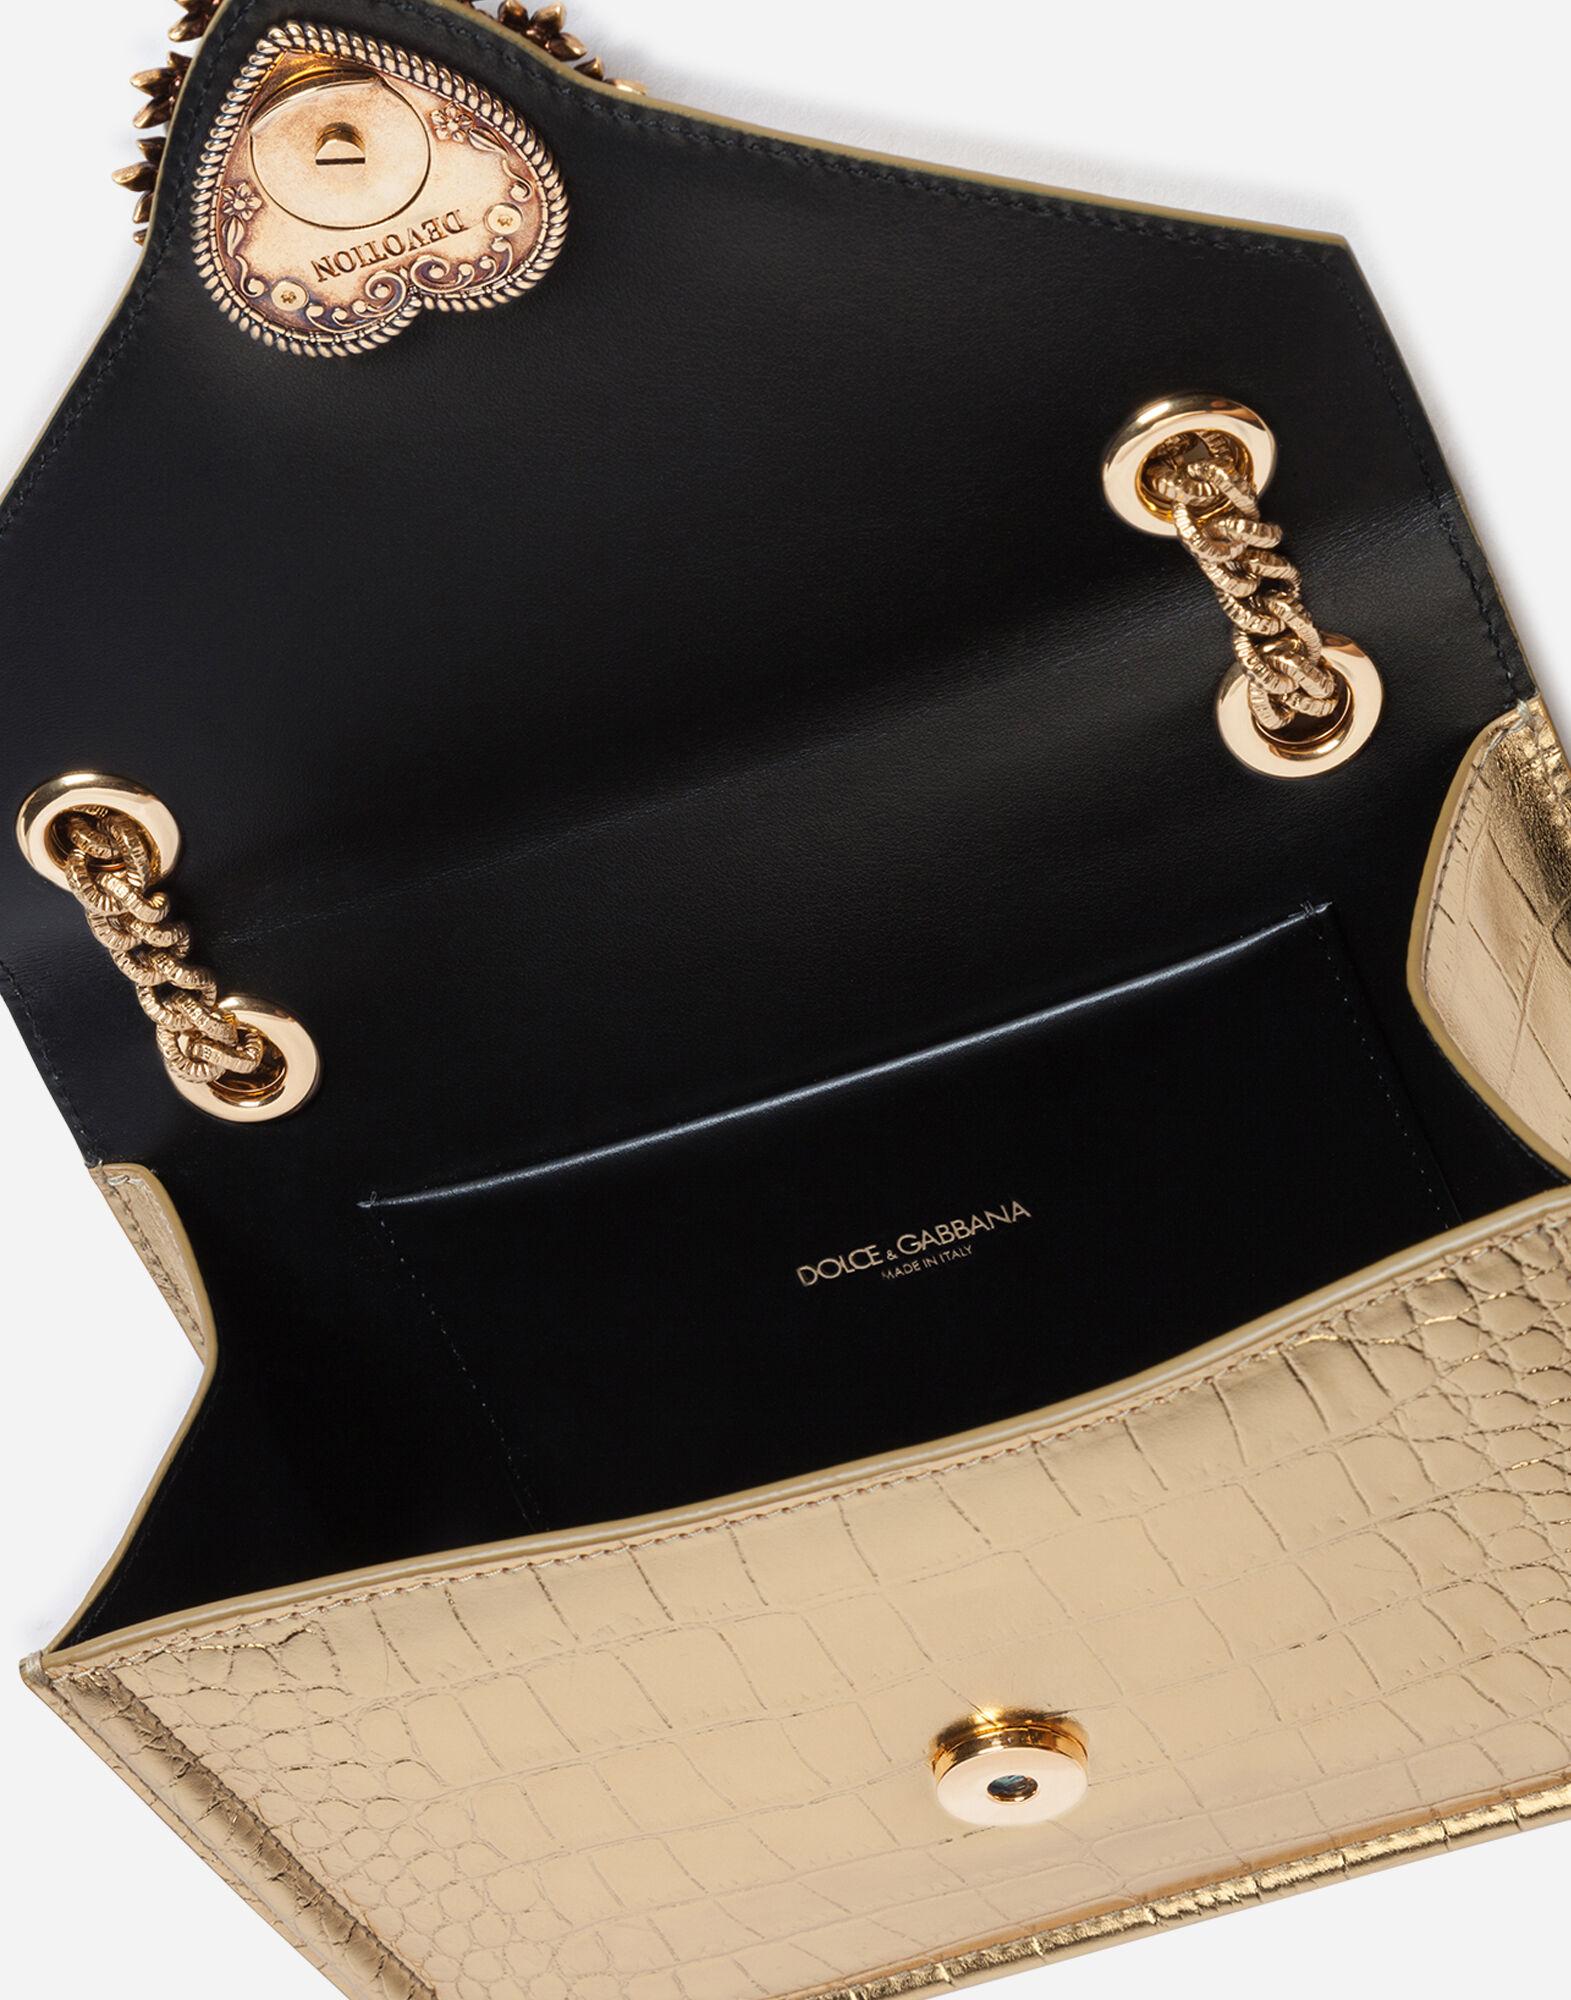 Dolce & Gabbana Leather Medium Devotion Bag in Gold (Metallic) - Lyst